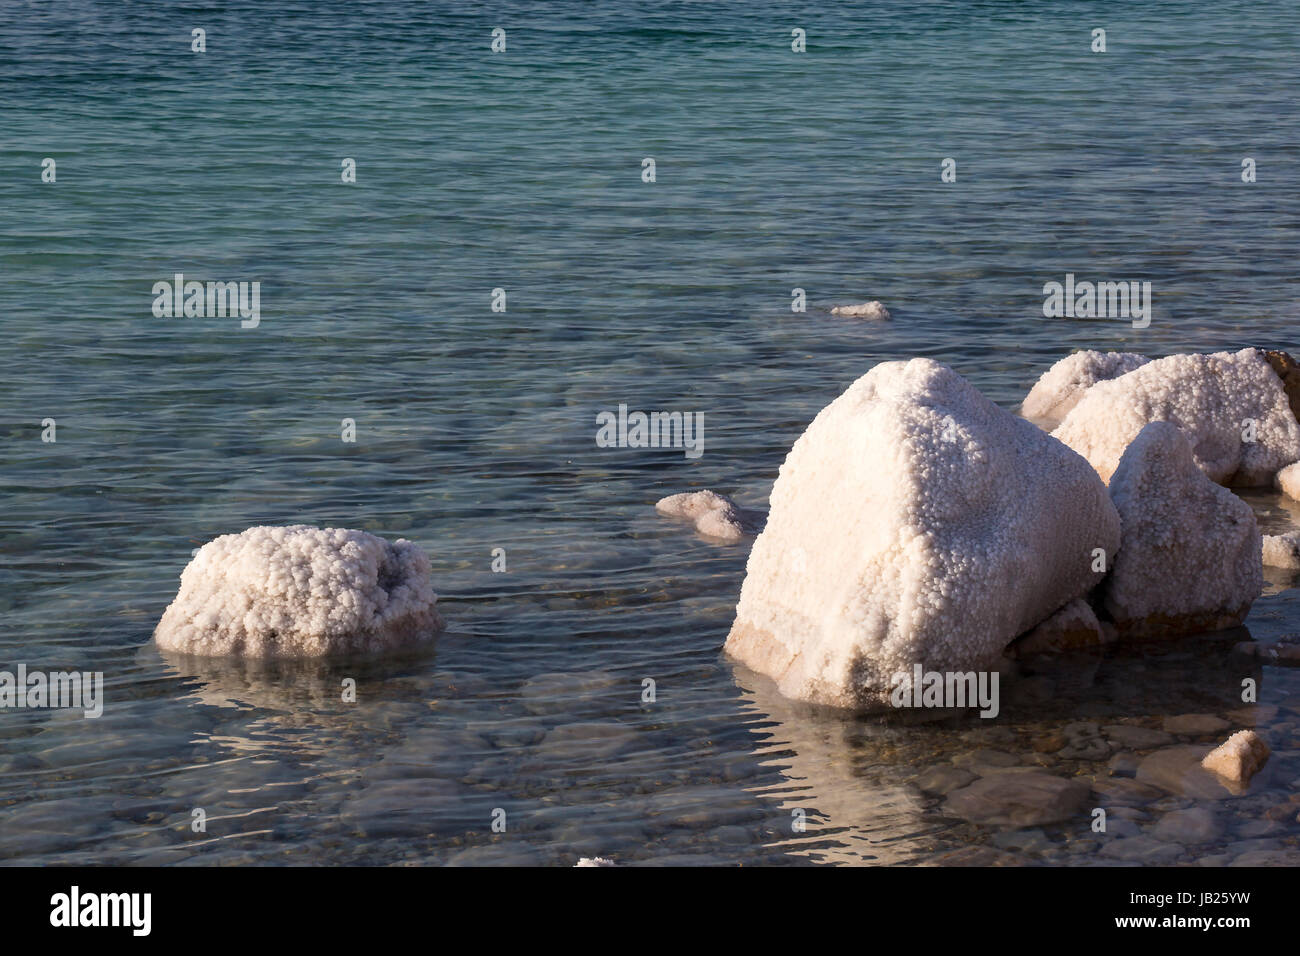 Dead Sea salt deposits stones white crystals Stock Photo